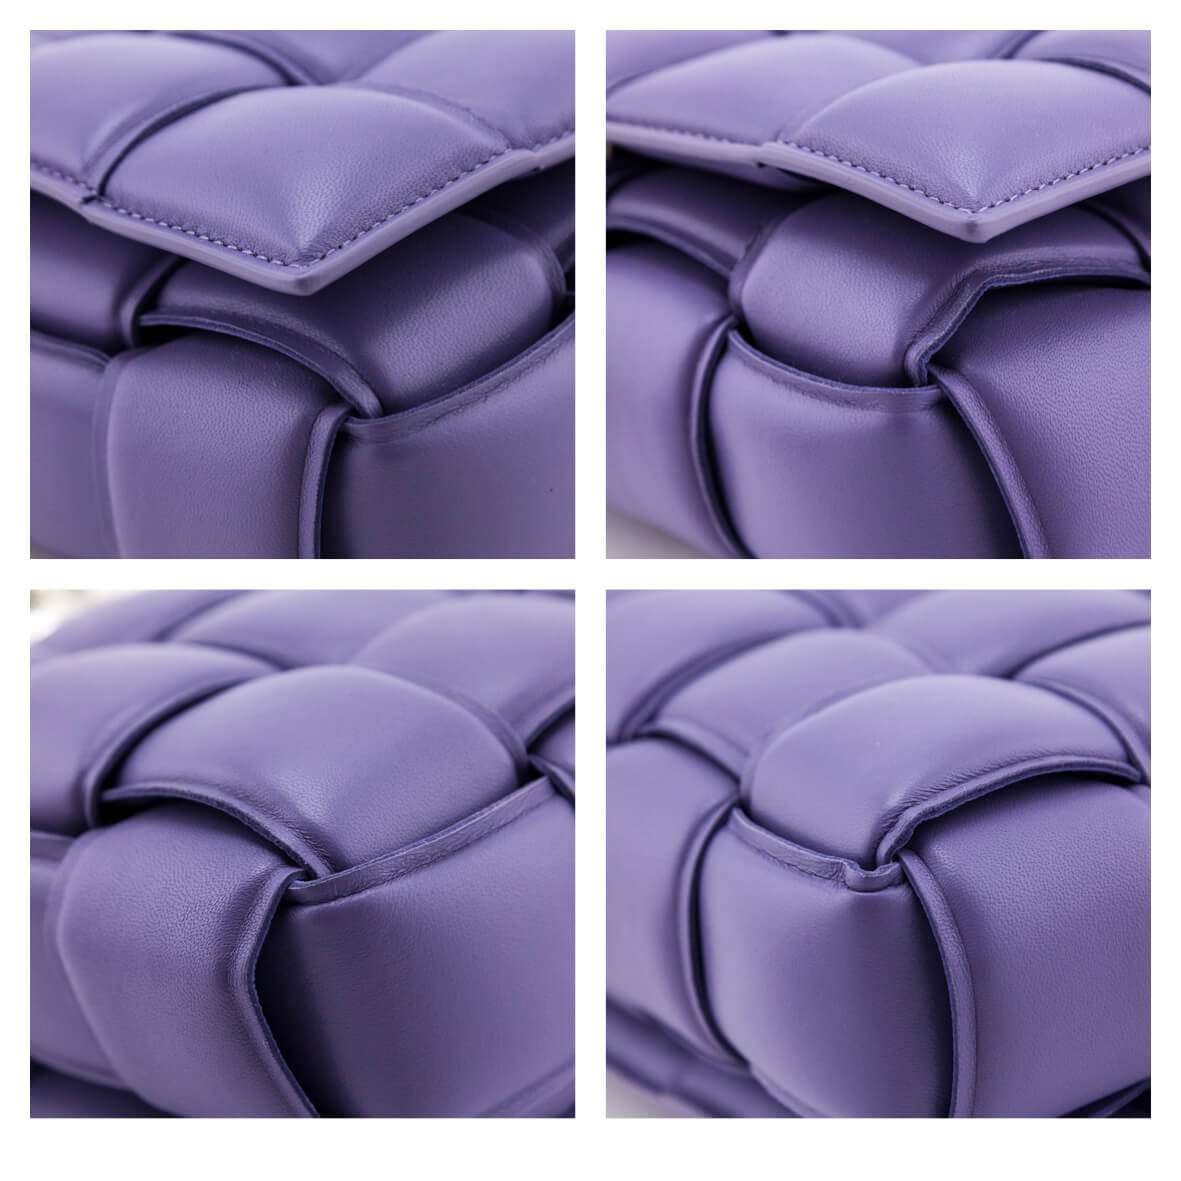 Bottega Veneta Lavender Lambskin Intrecciato Maxi Padded Chain Cassette Crossbody Bag - Love that Bag etc - Preowned Authentic Designer Handbags & Preloved Fashions